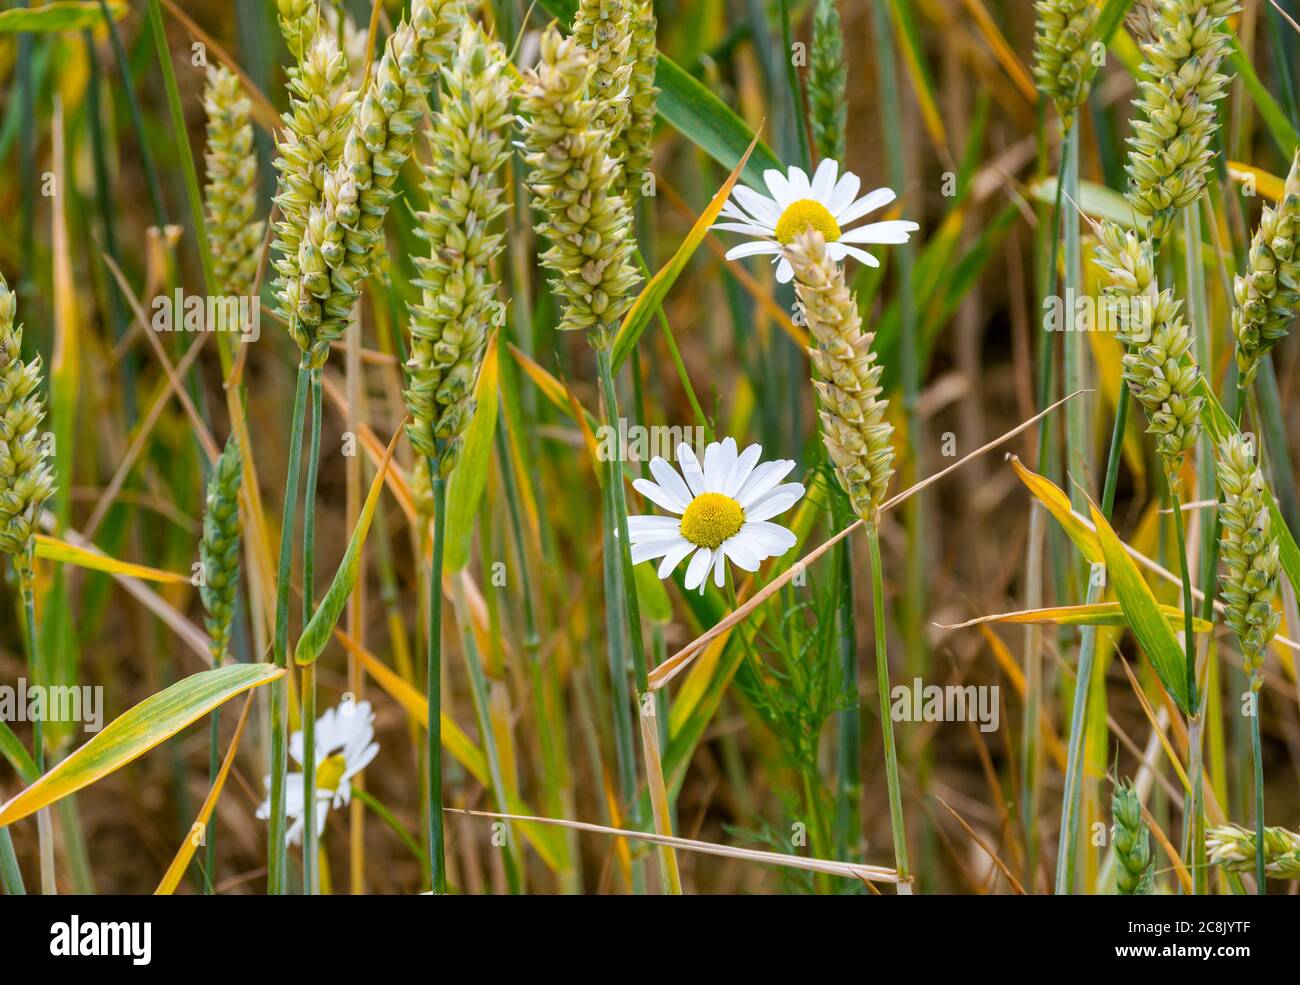 Close up of wildflowers, ox-eye daisies (Leucanthemum vulgare) grwing among wheat stalks in a crop field, East Lothian, Scotland, UK Stock Photo